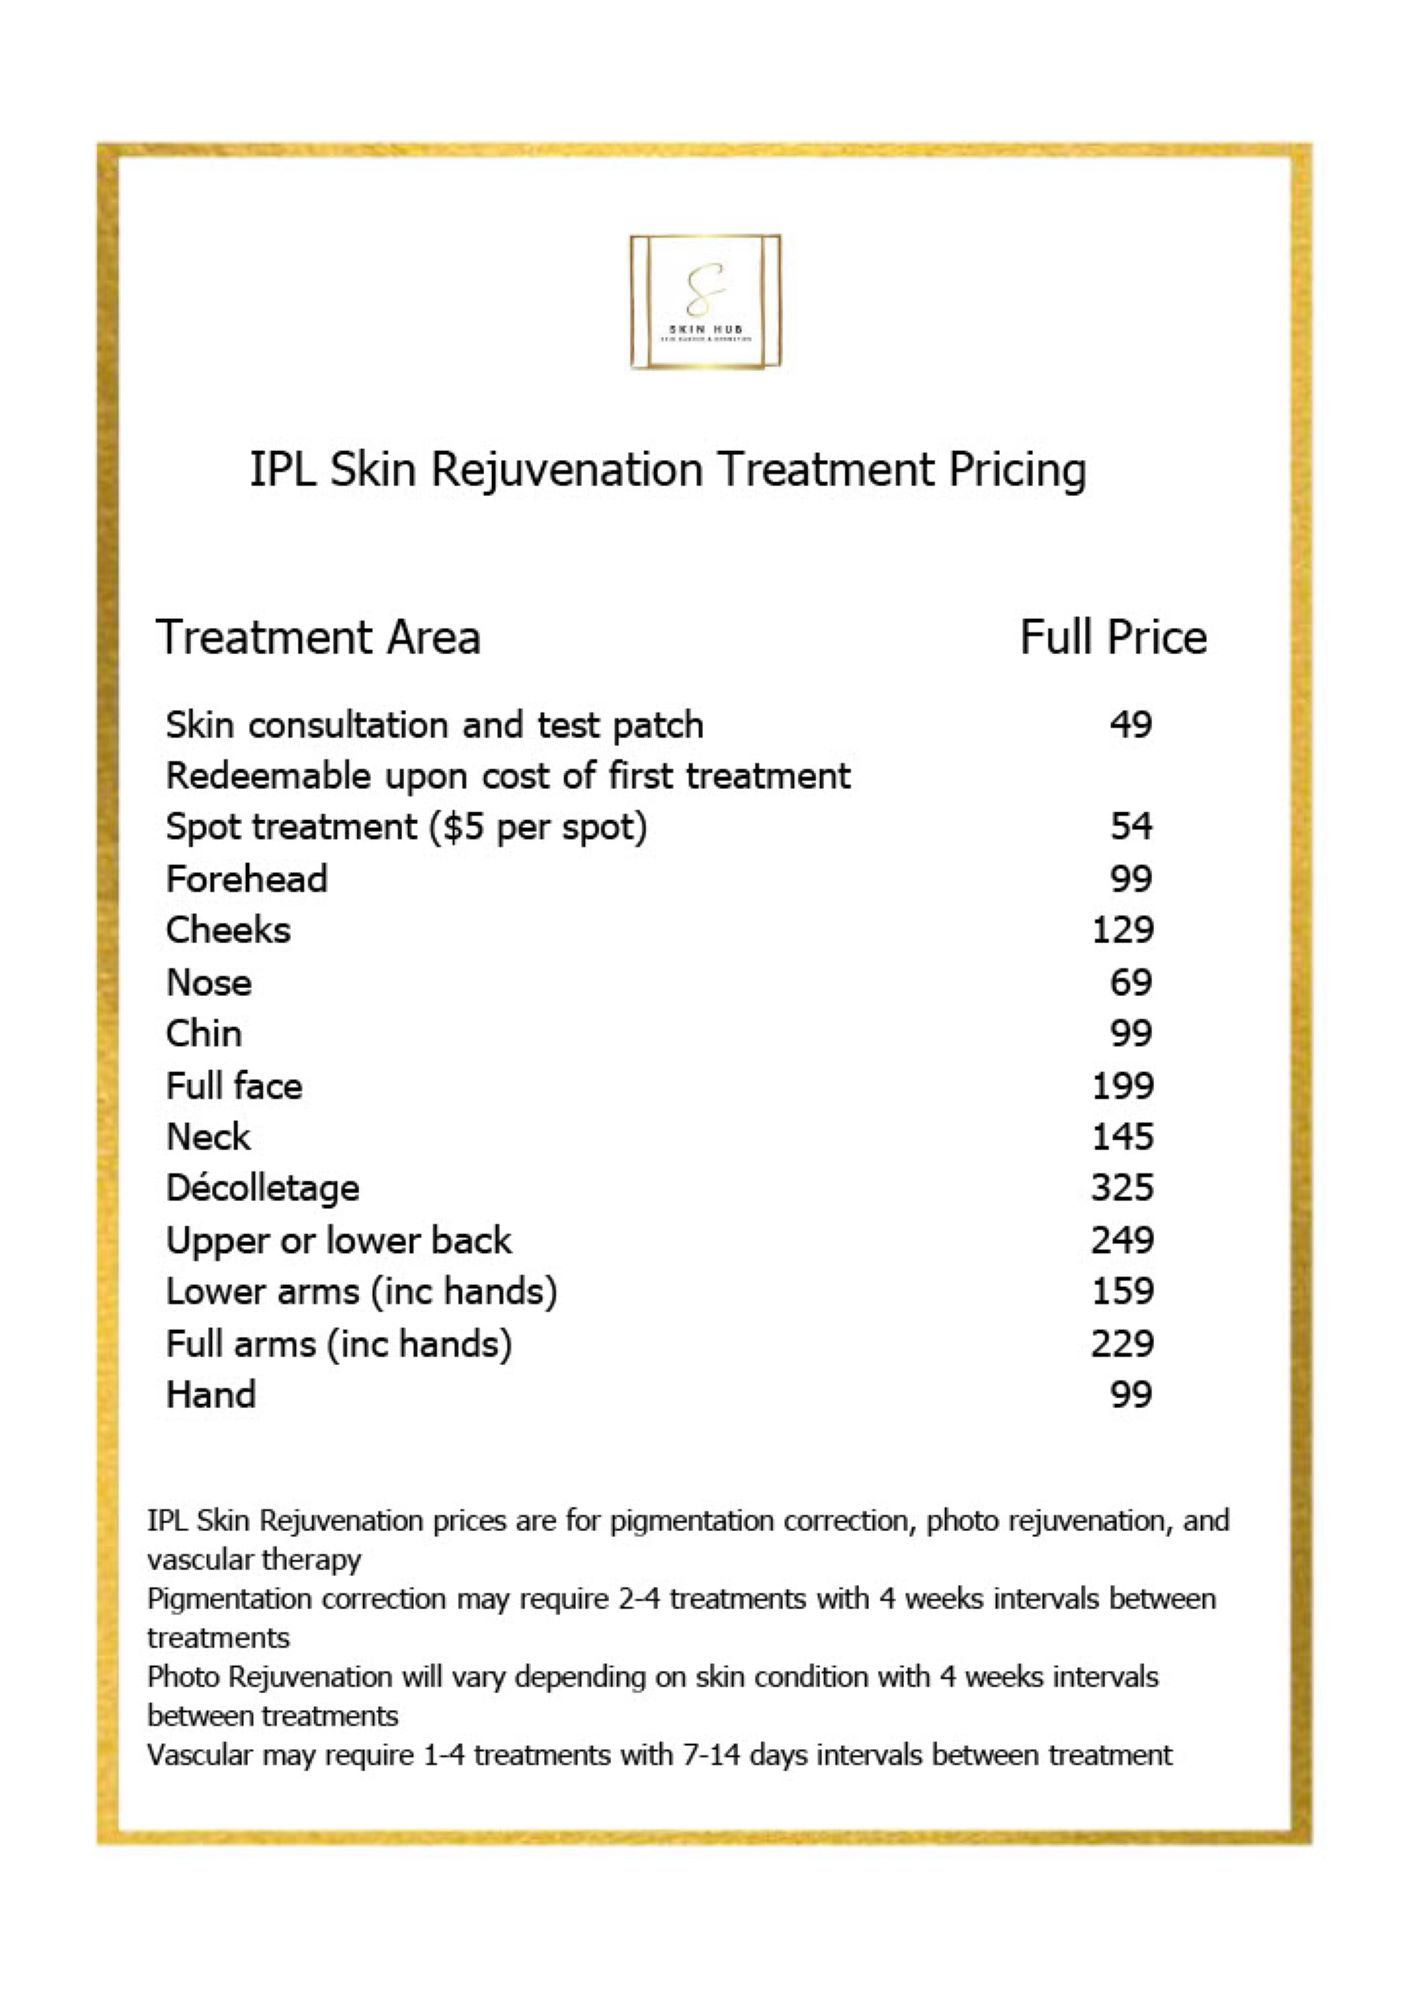 IPL Skin Rejuvenation Price